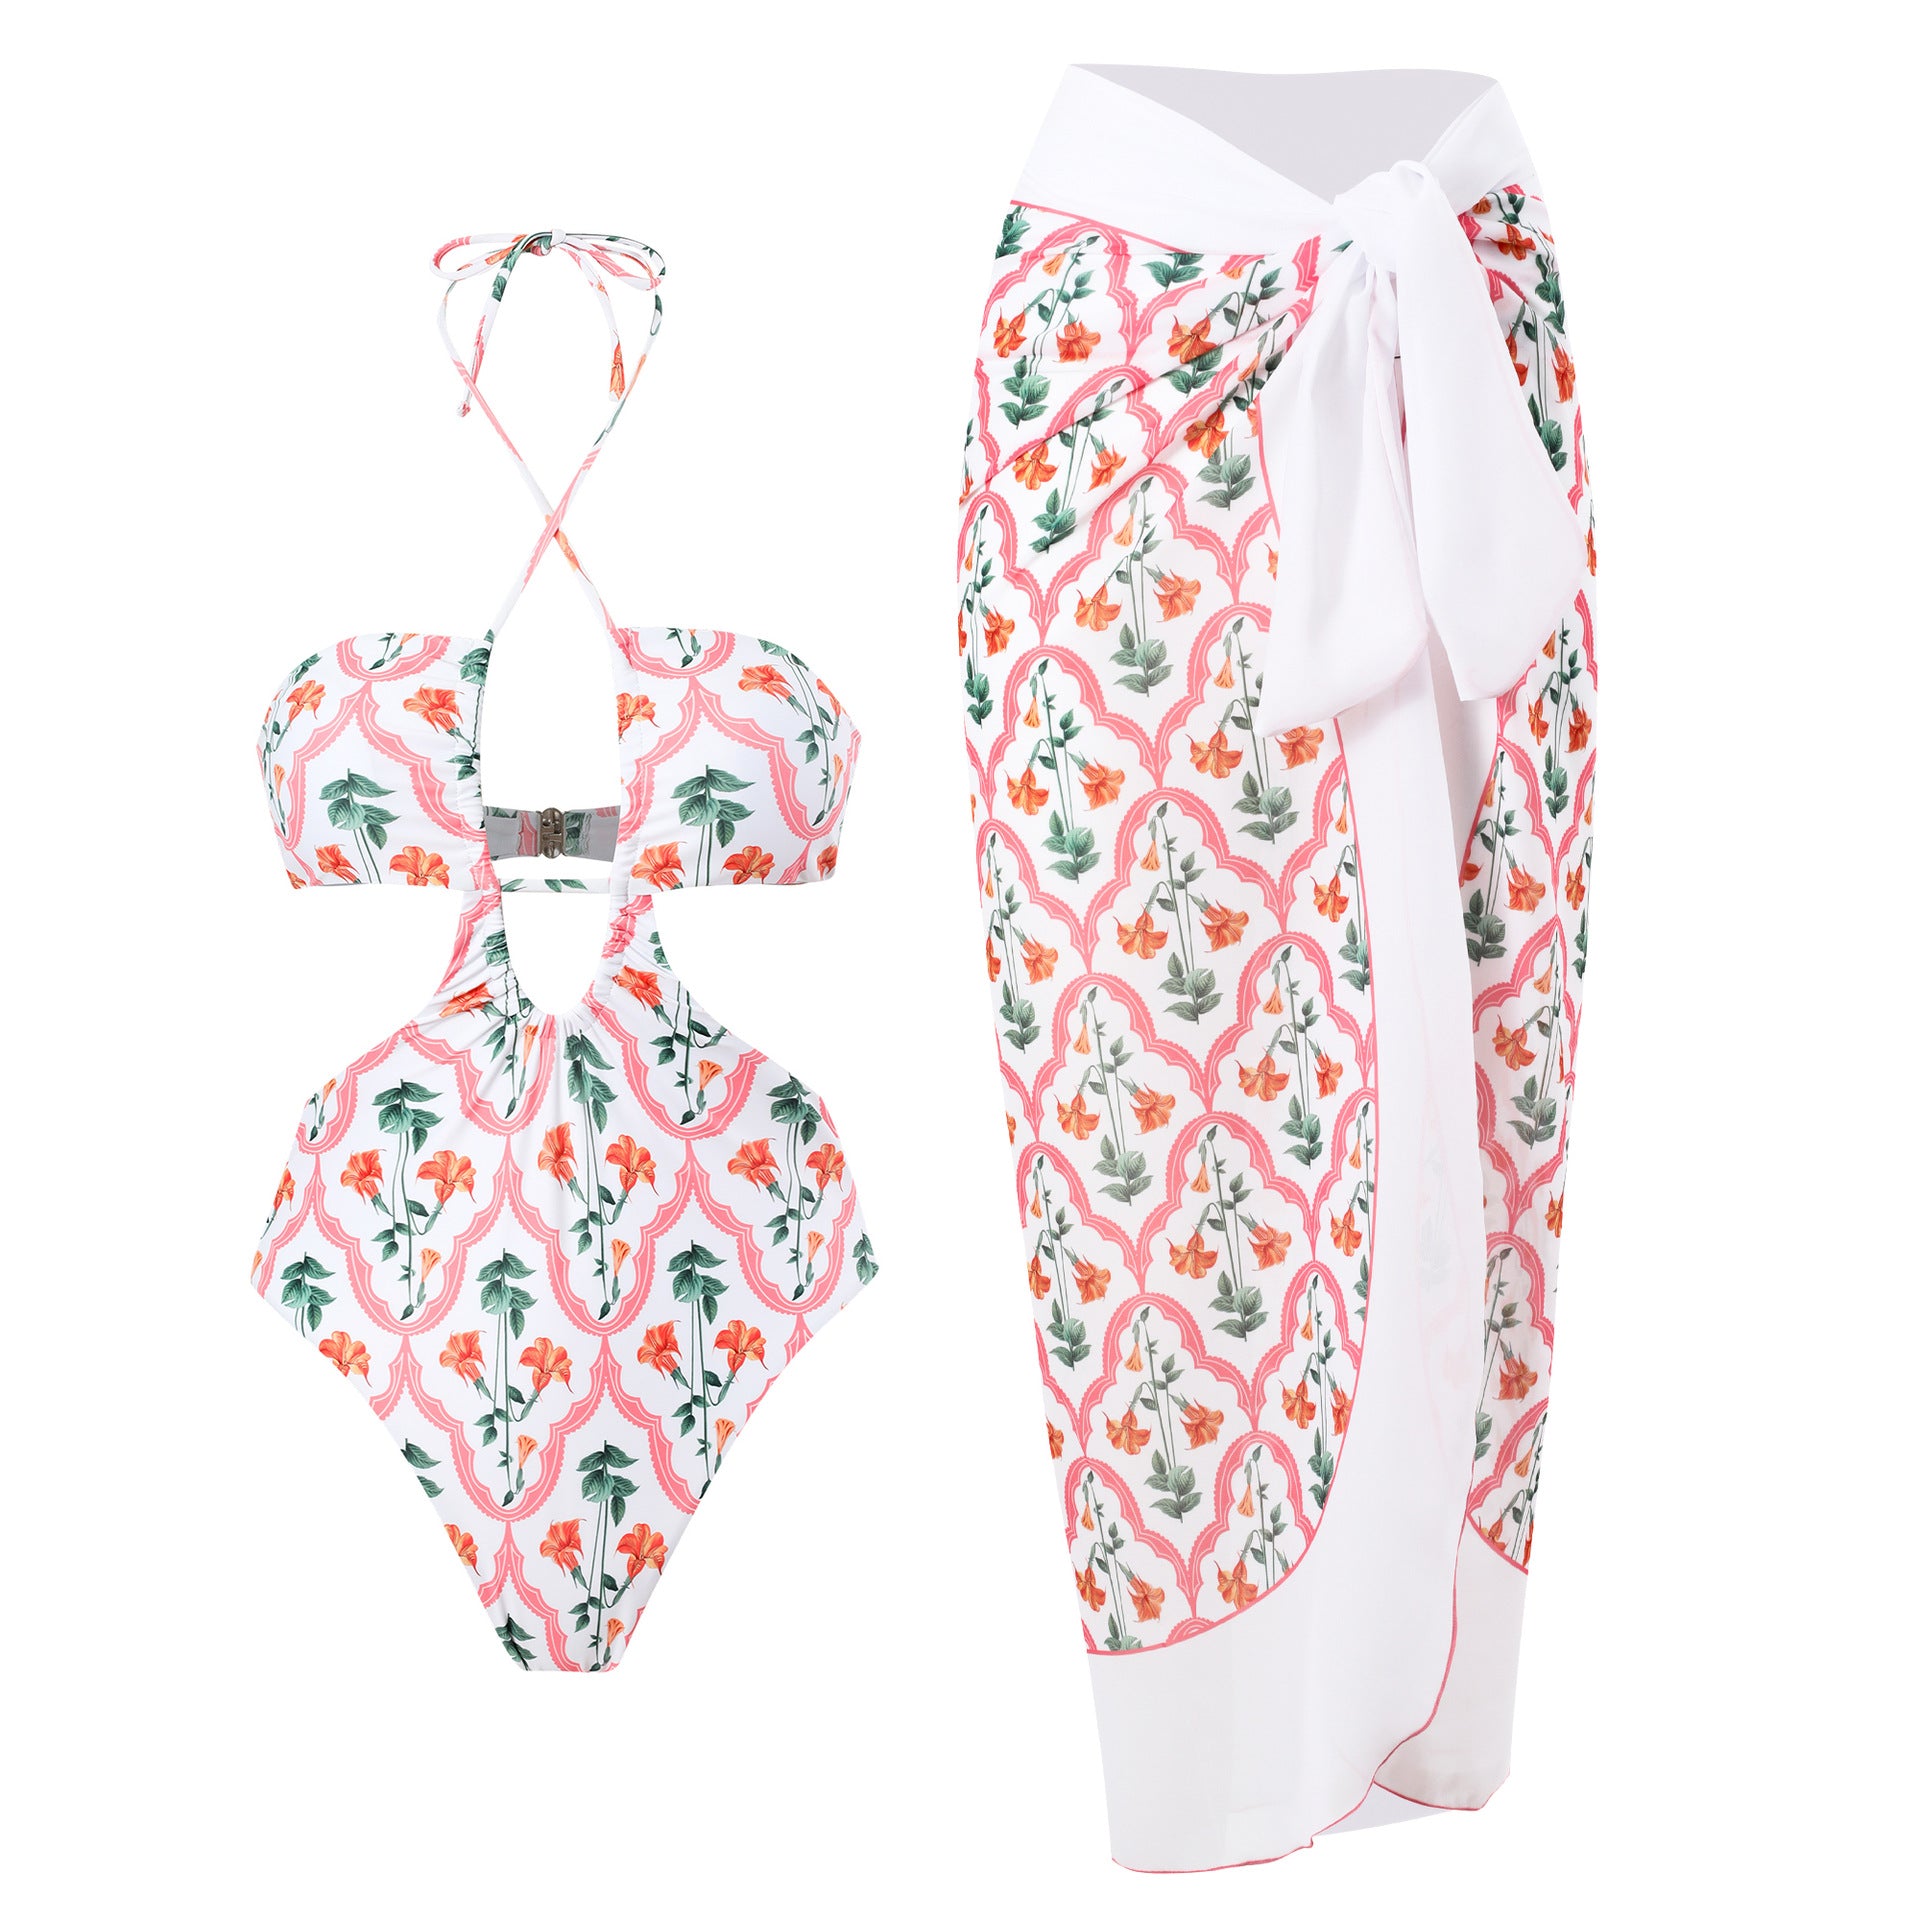 Women 2 Pieces Set Swimsuit Bikini Set With Skirt Beachwear Bathing Suit